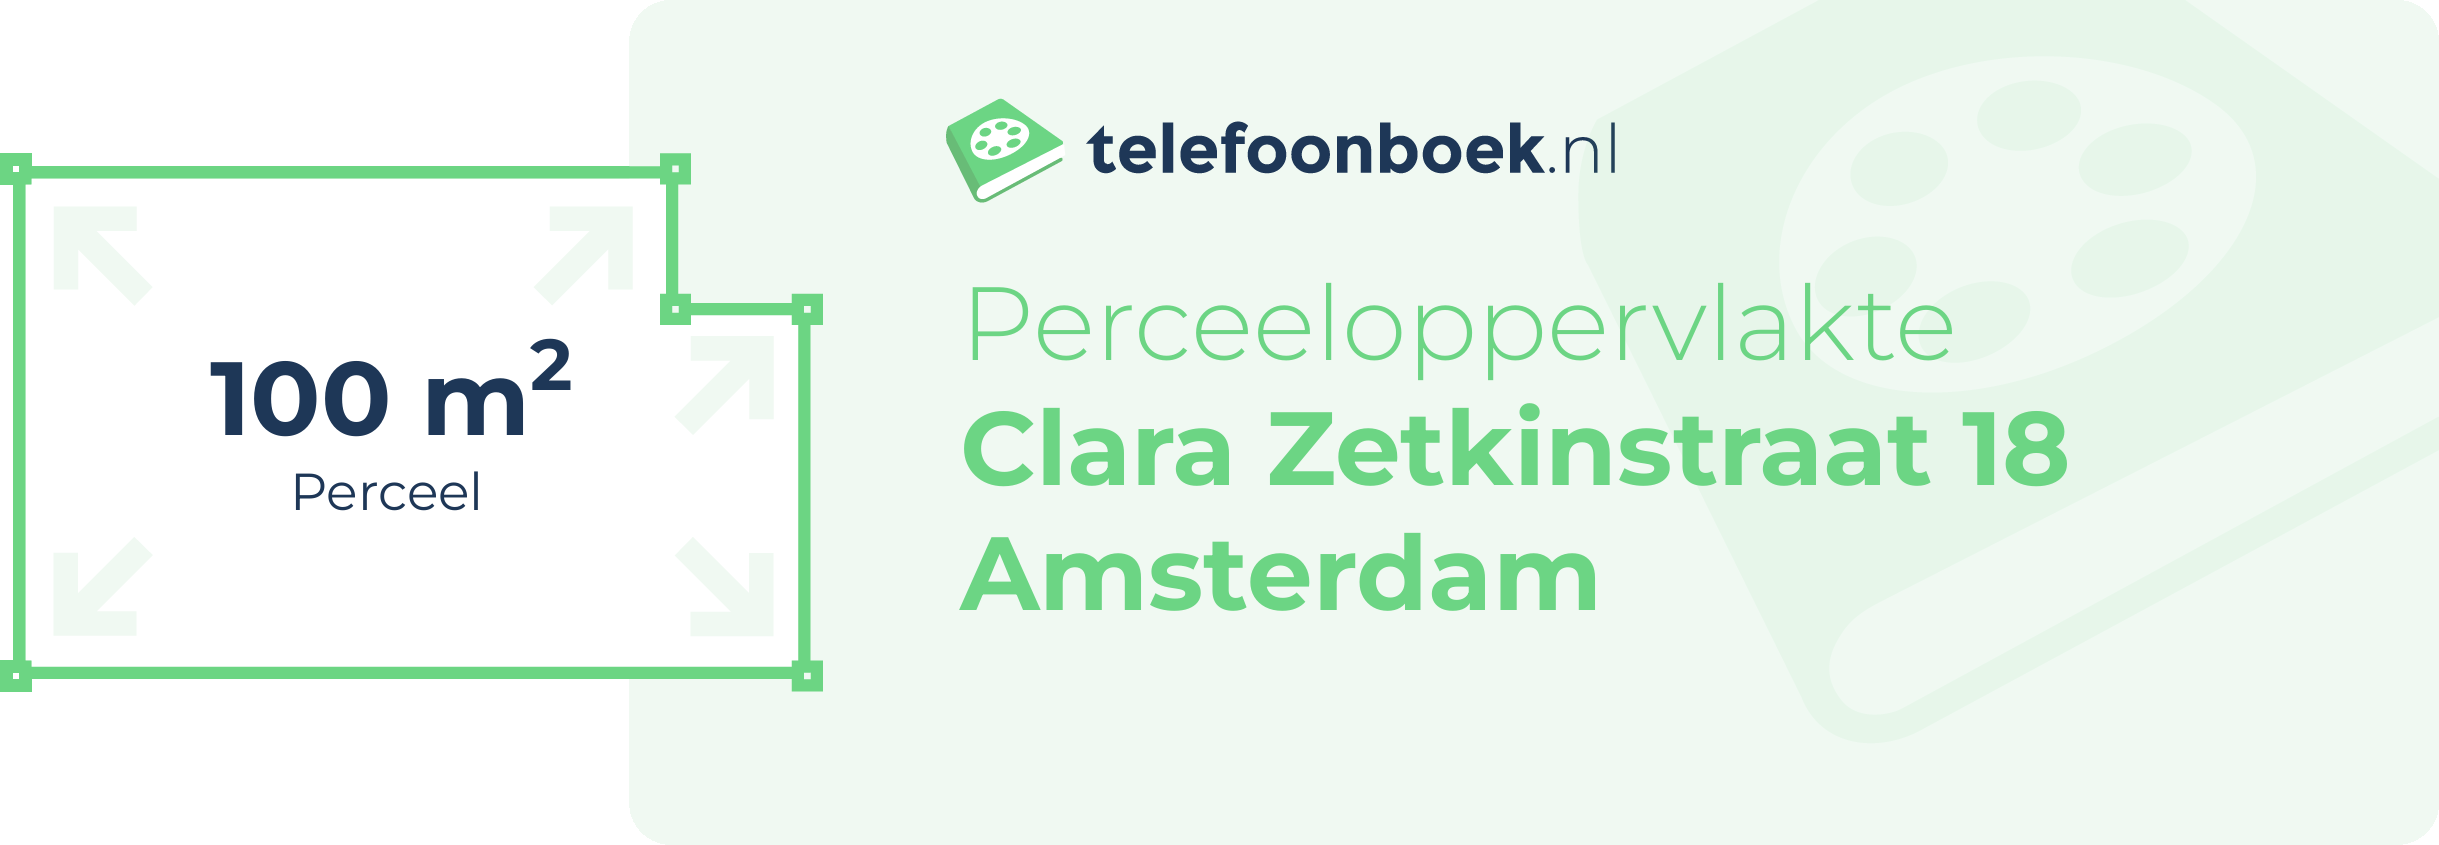 Perceeloppervlakte Clara Zetkinstraat 18 Amsterdam